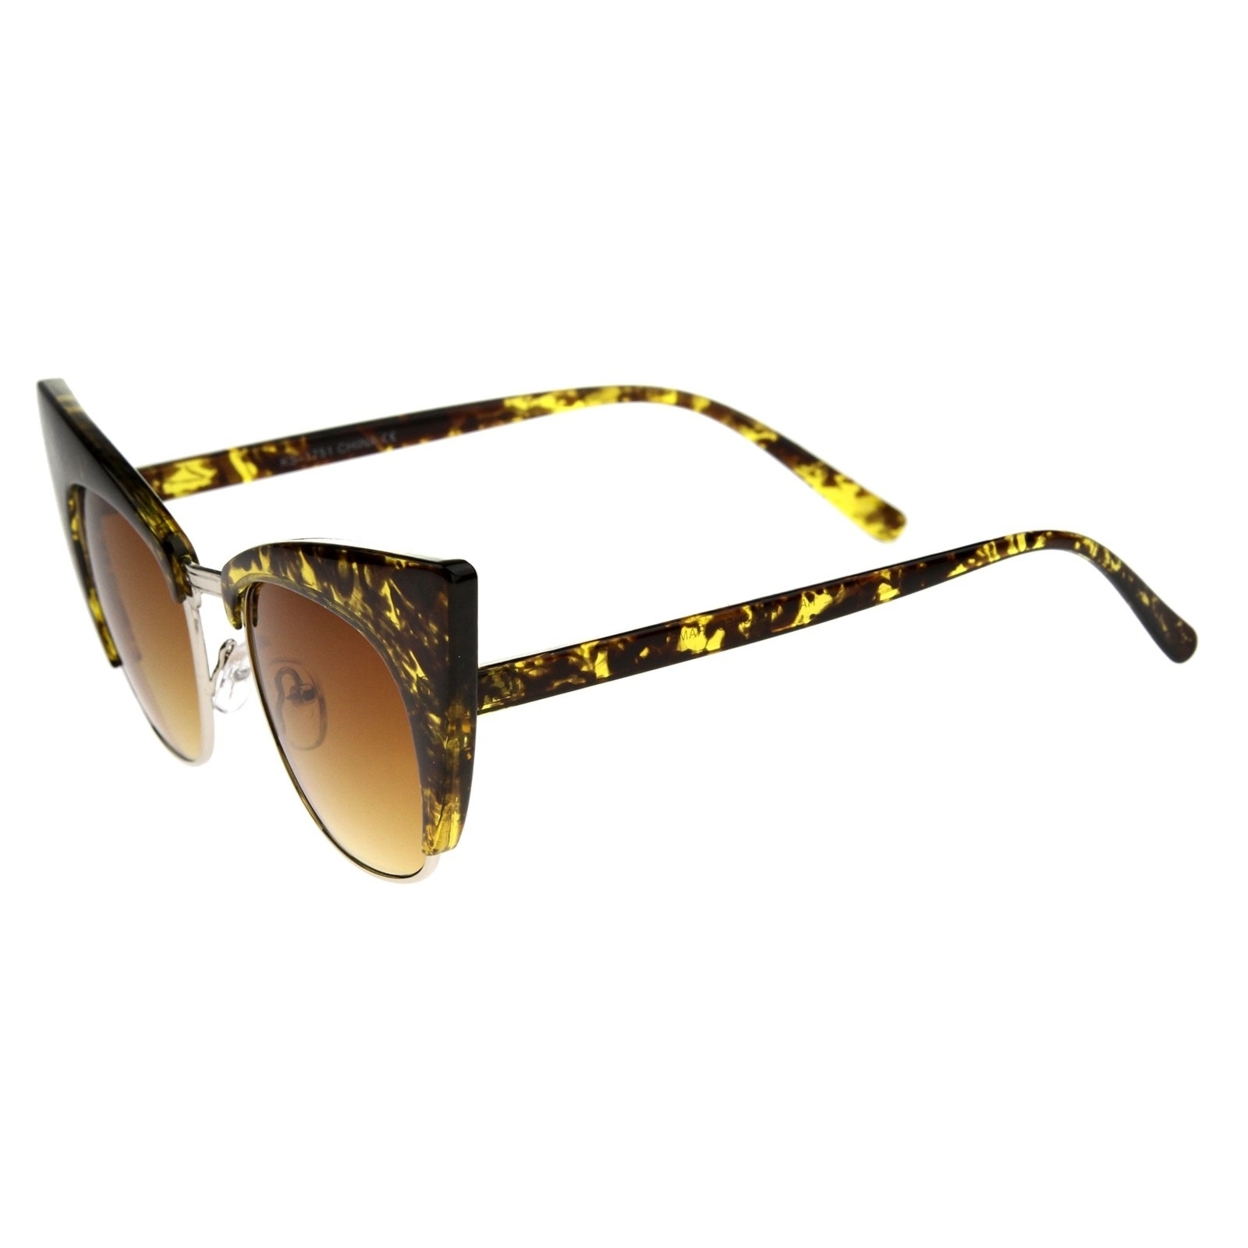 Women's High Fashion Half Frame Bold Square Cat Eye Sunglasses 50mm - Black / Lavender